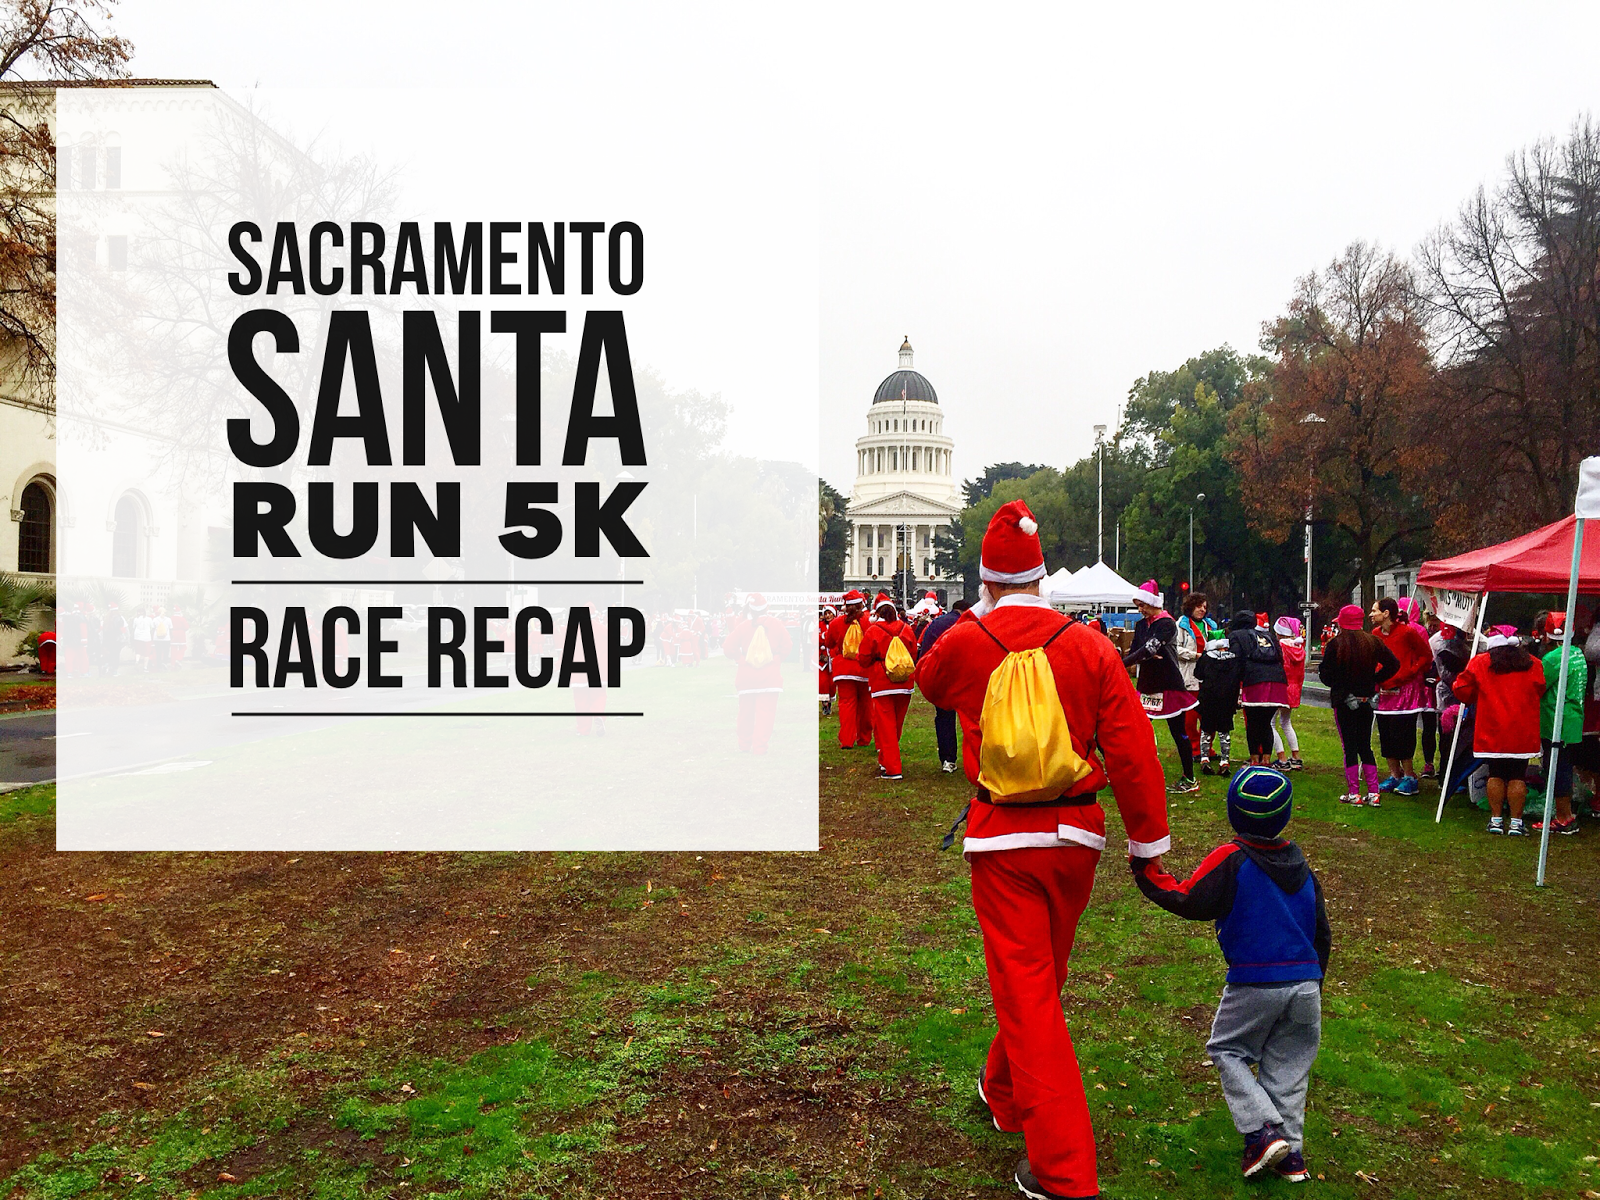 RunHikePlay Fun run for the Fam! Our Sacramento Santa Run 5K Race